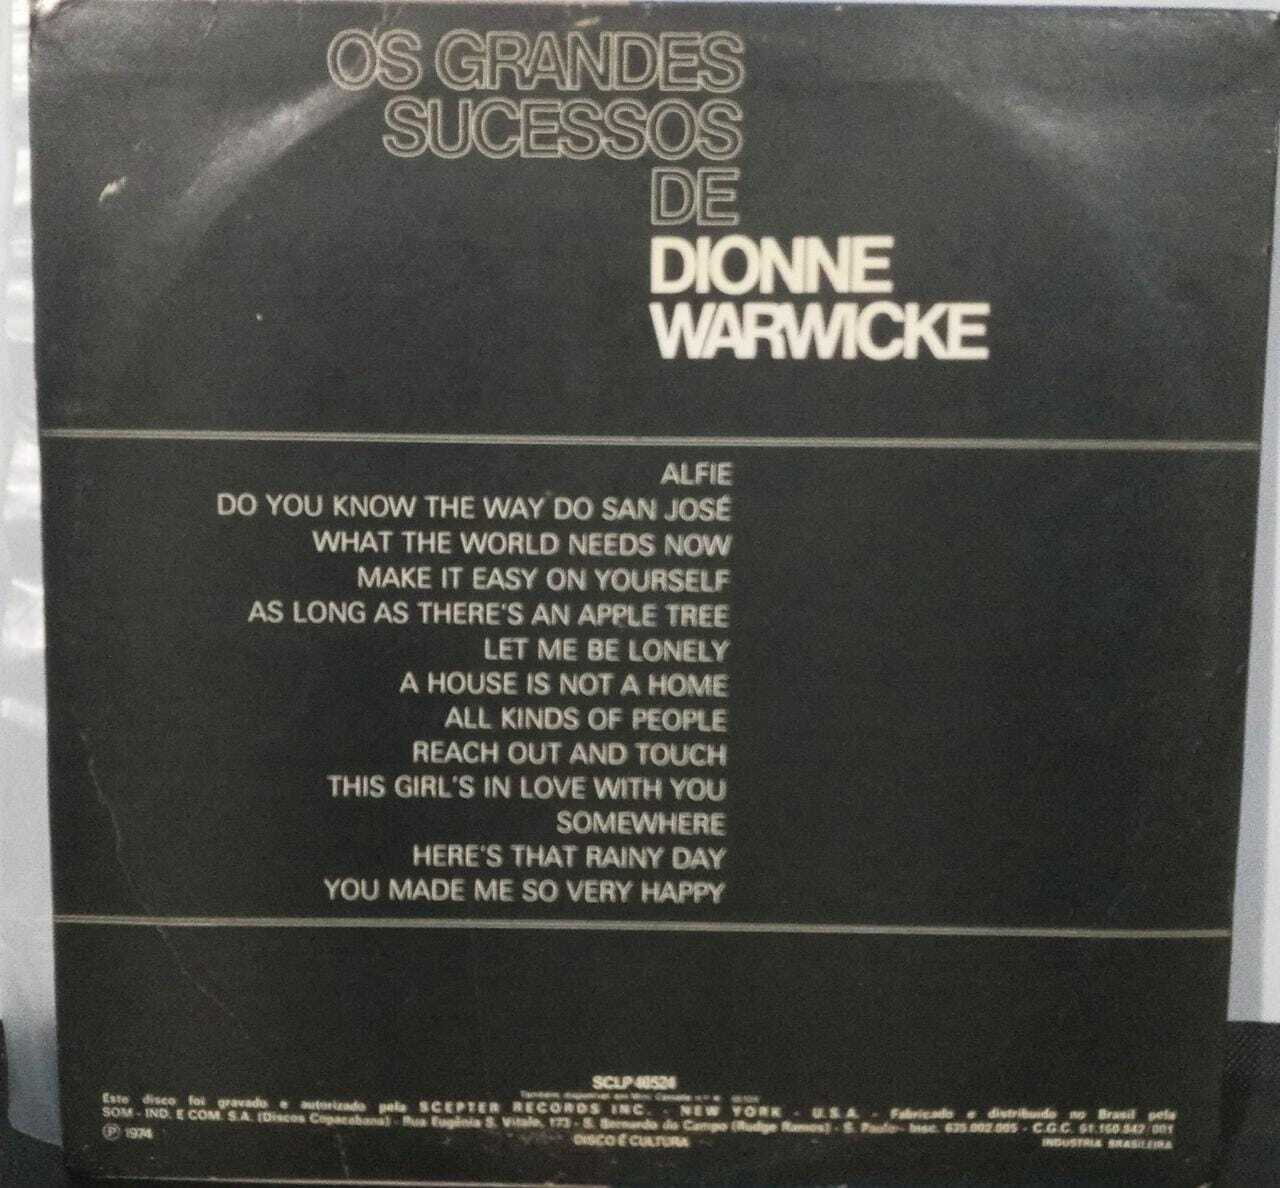 Vinil - Dionne Warwicke - Os Grandes Sucessos De